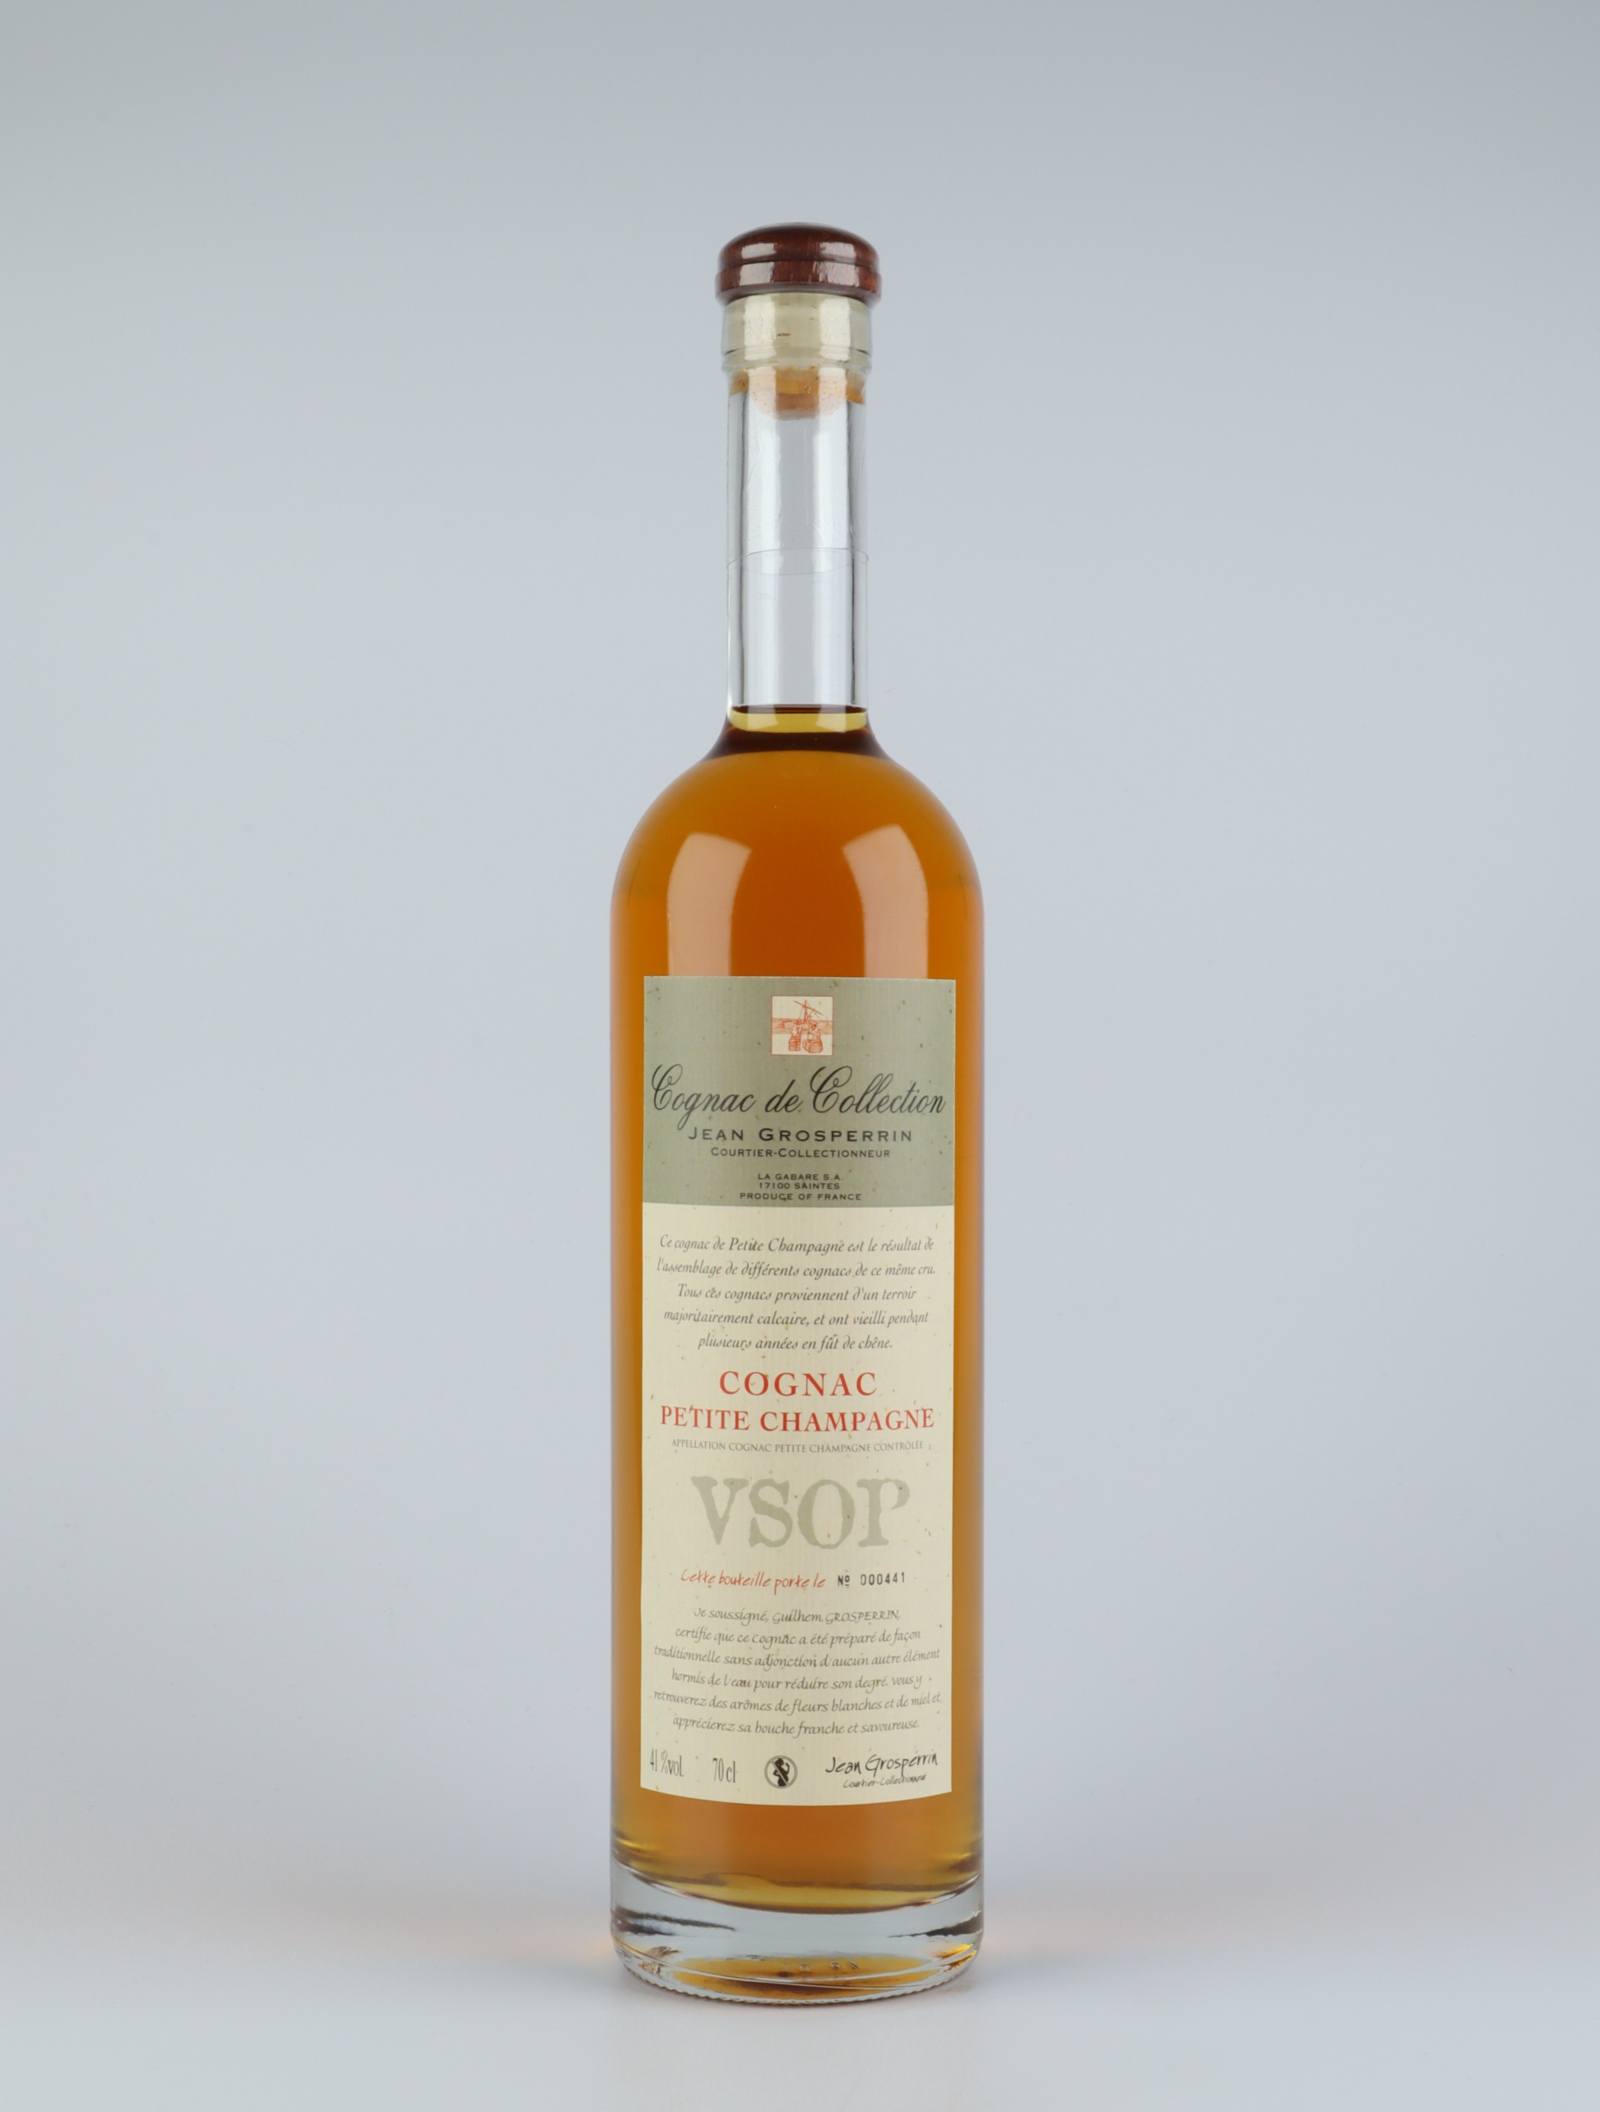 A bottle N.V. Cognac - VSOP - Petite Champagne Spirits from Jean Grosperrin, Cognac in France